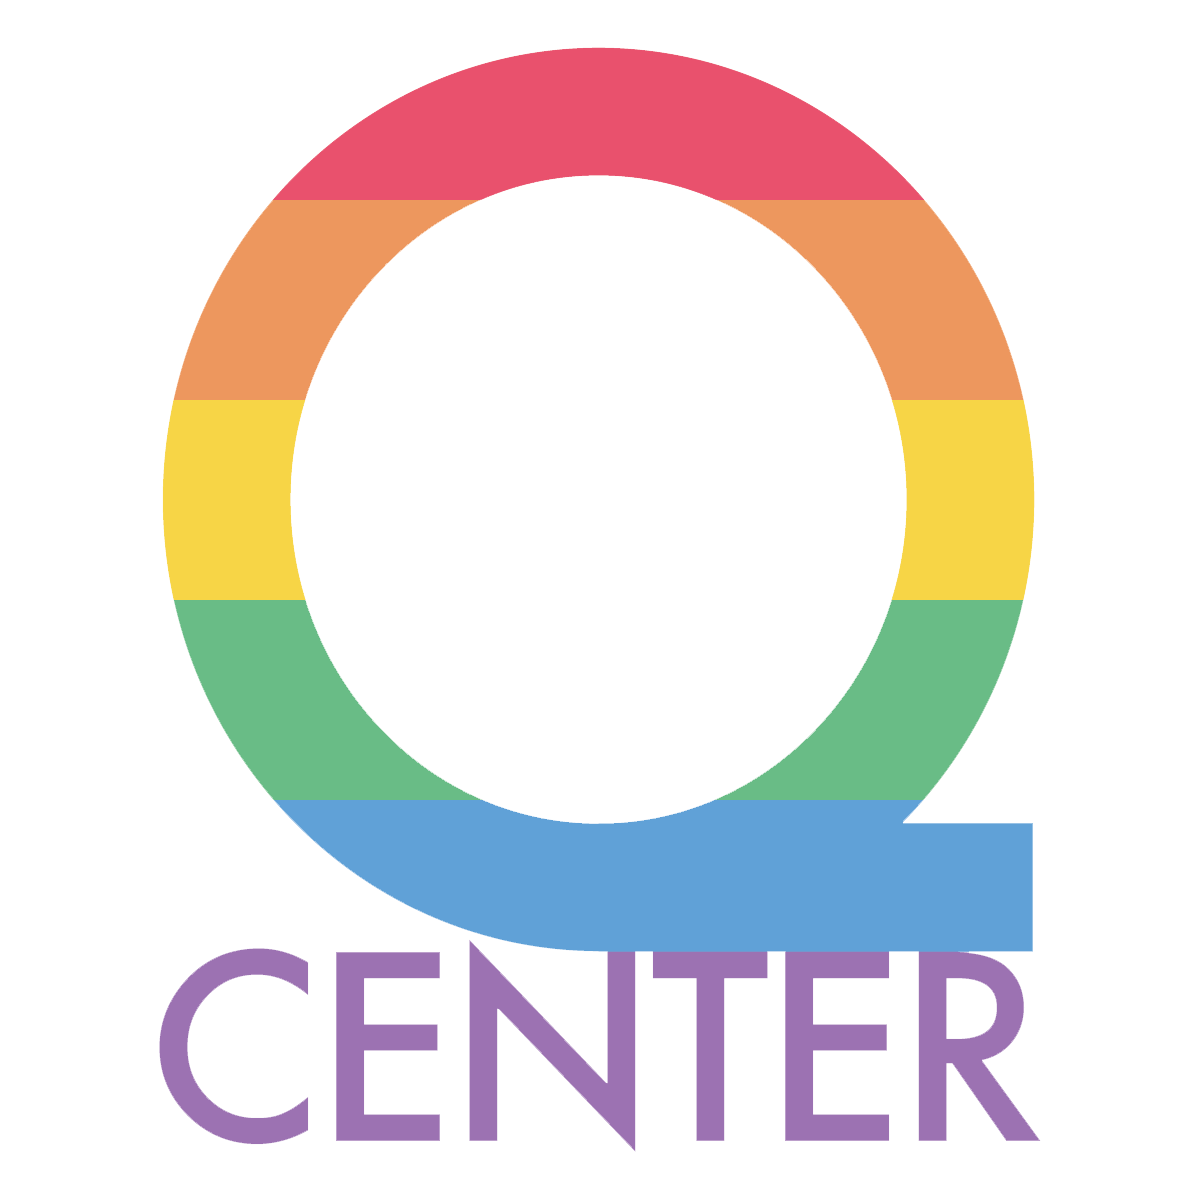 Q Center logo. A rainbow 'Q' with the word 'Center' beneath it.